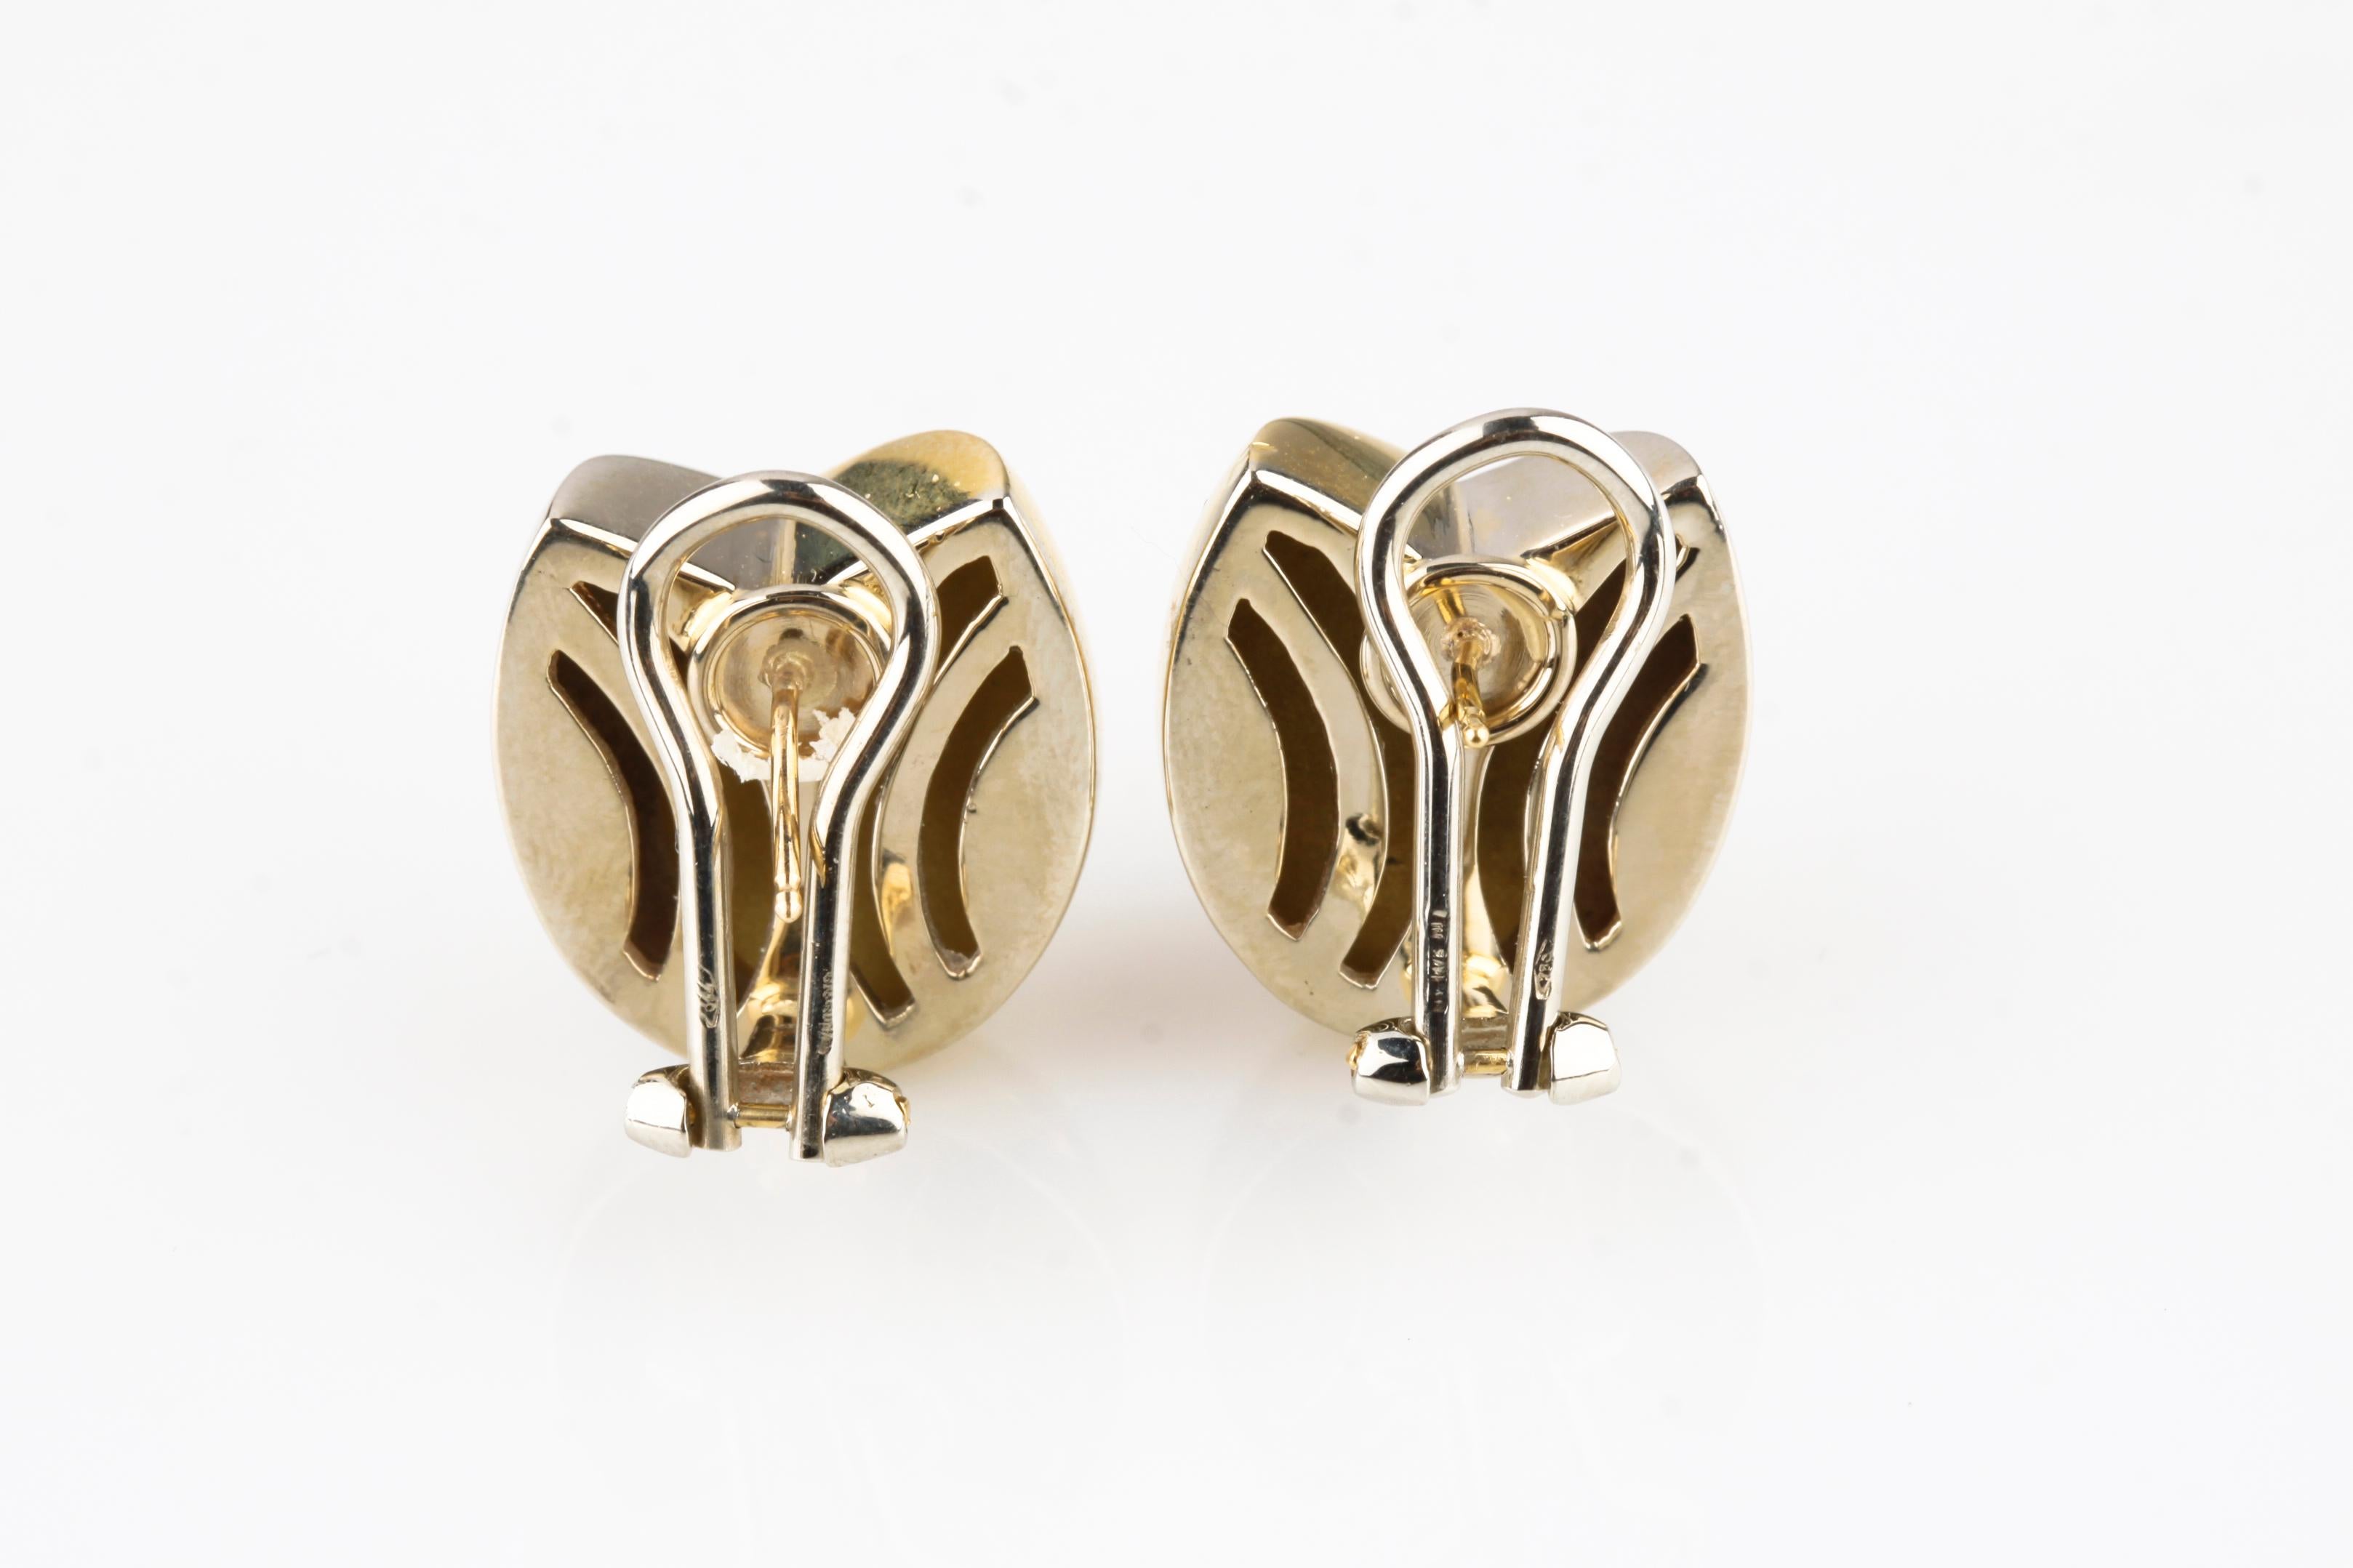 Beautiful Rosebud Earrings
Two-Tone 18k Gold
Total Mass = 16.2 grams
Length of Drop = 19 mm
Width = 14 mm